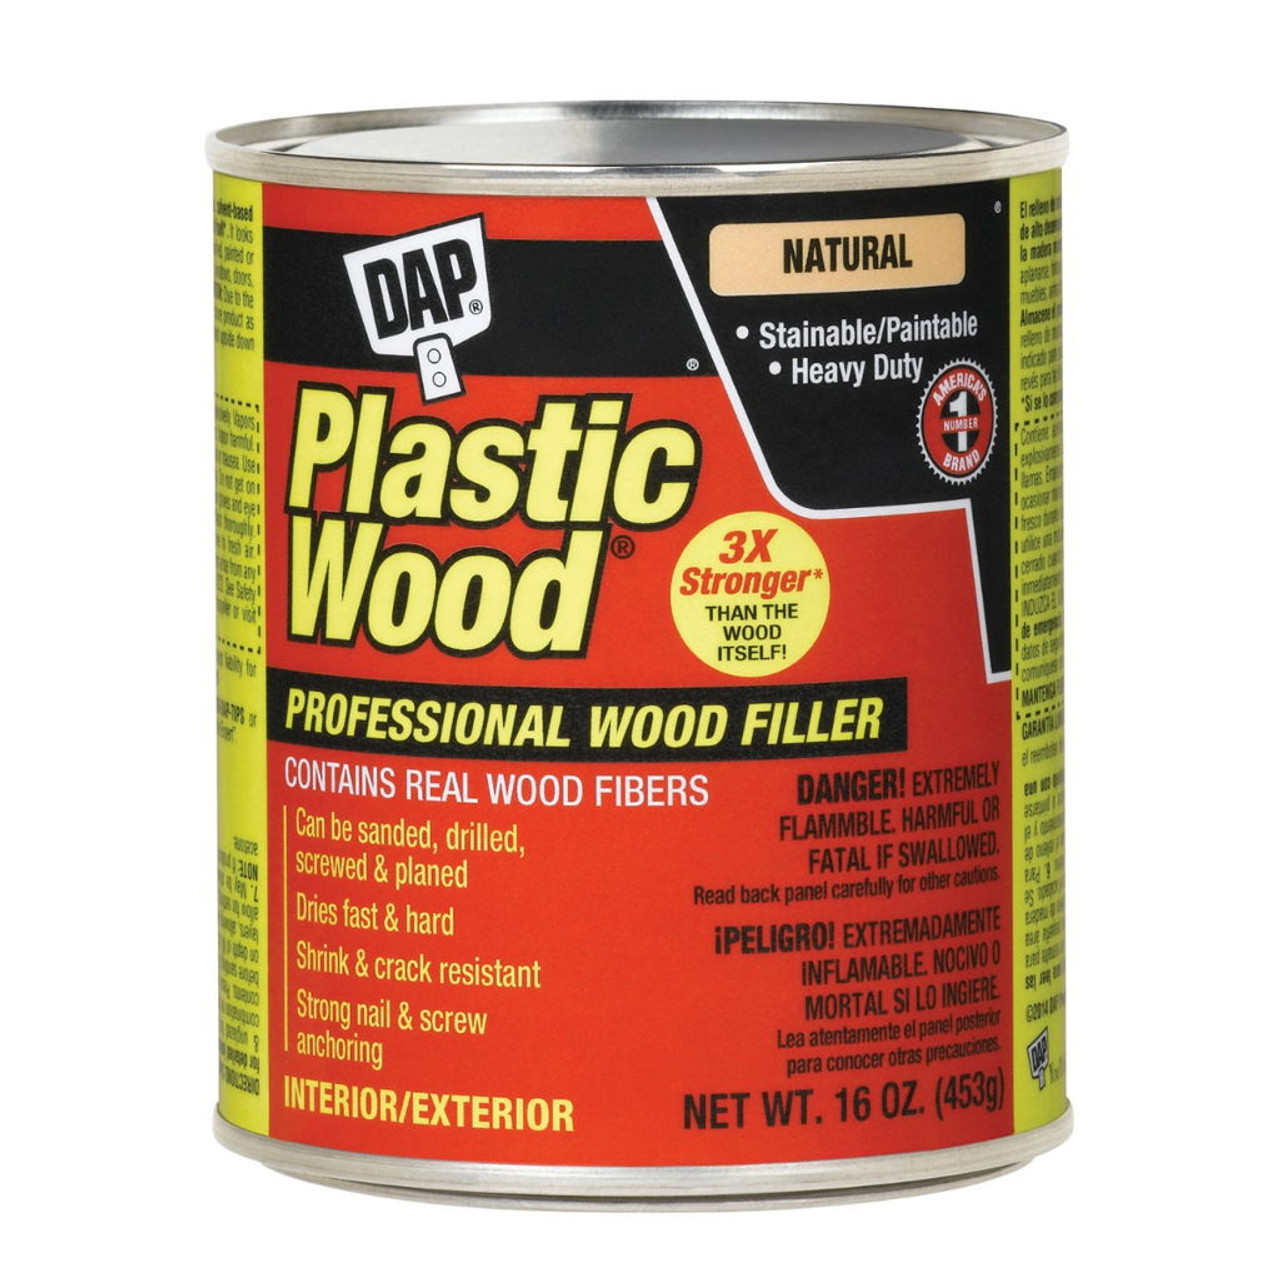 Dap Plastic Wood Professional Wood Filler - 16 oz 21506